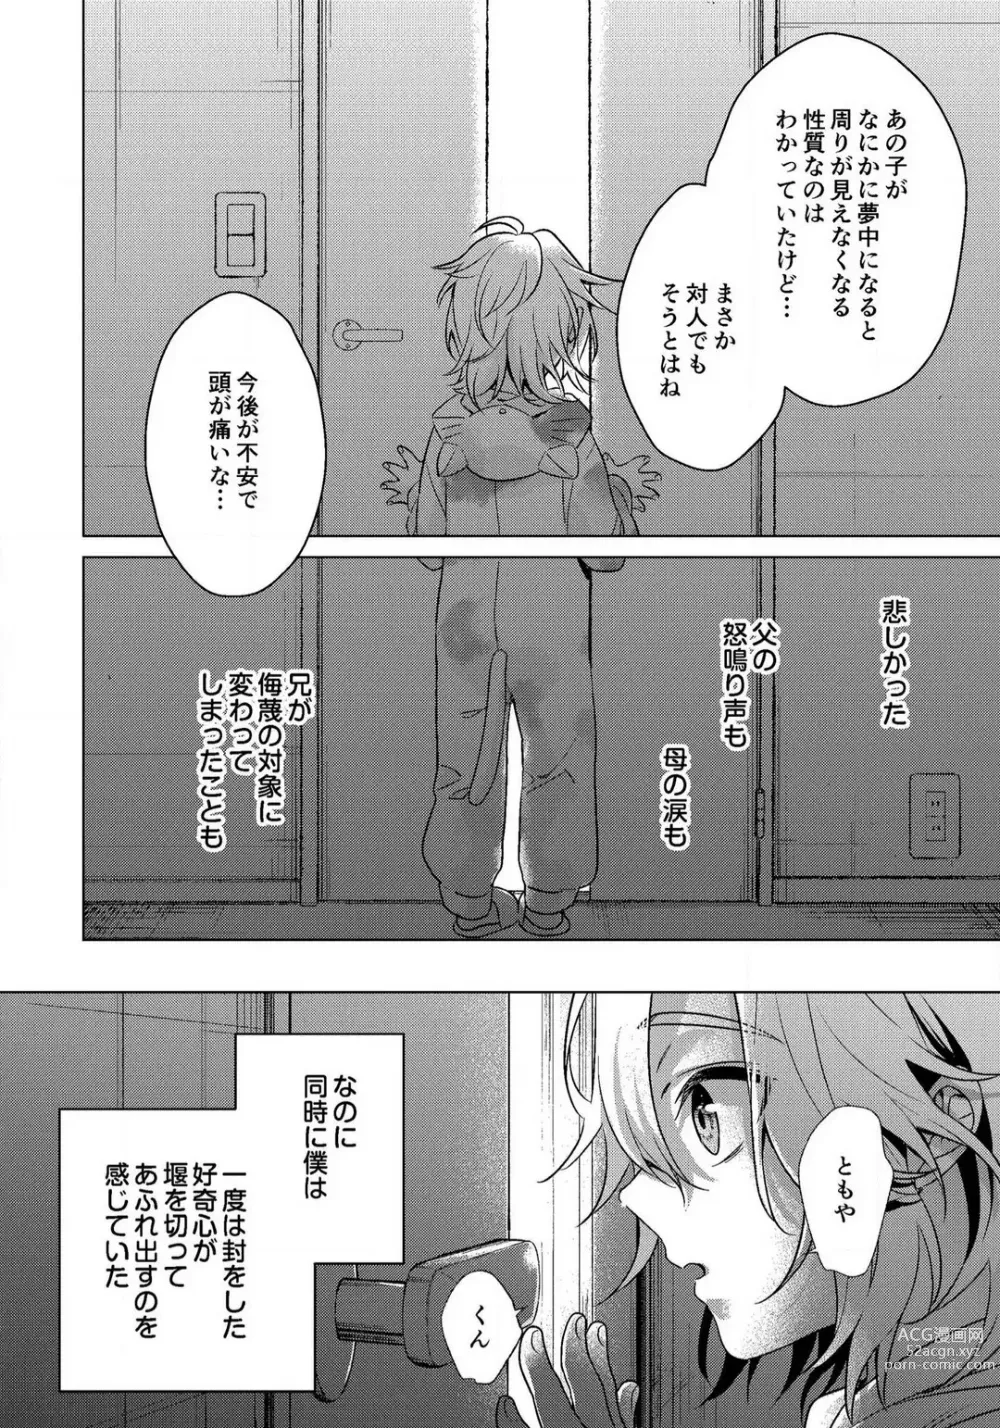 Page 22 of manga Ijimerare - Onna